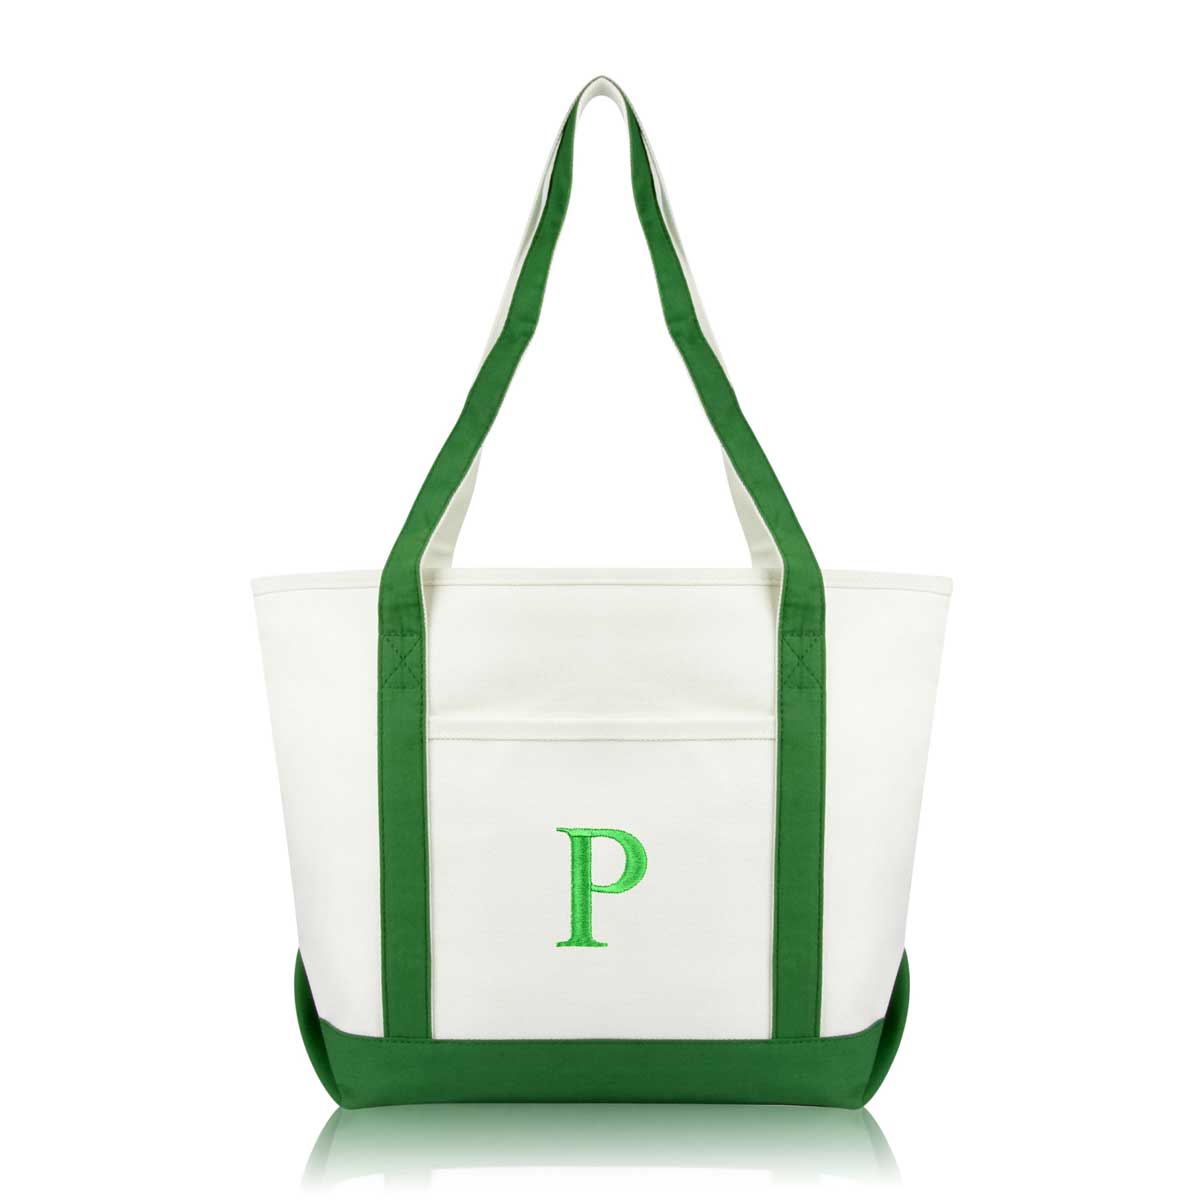 Dalix Medium Personalized Tote Bag Monogrammed Initial Letter - P Dark Green